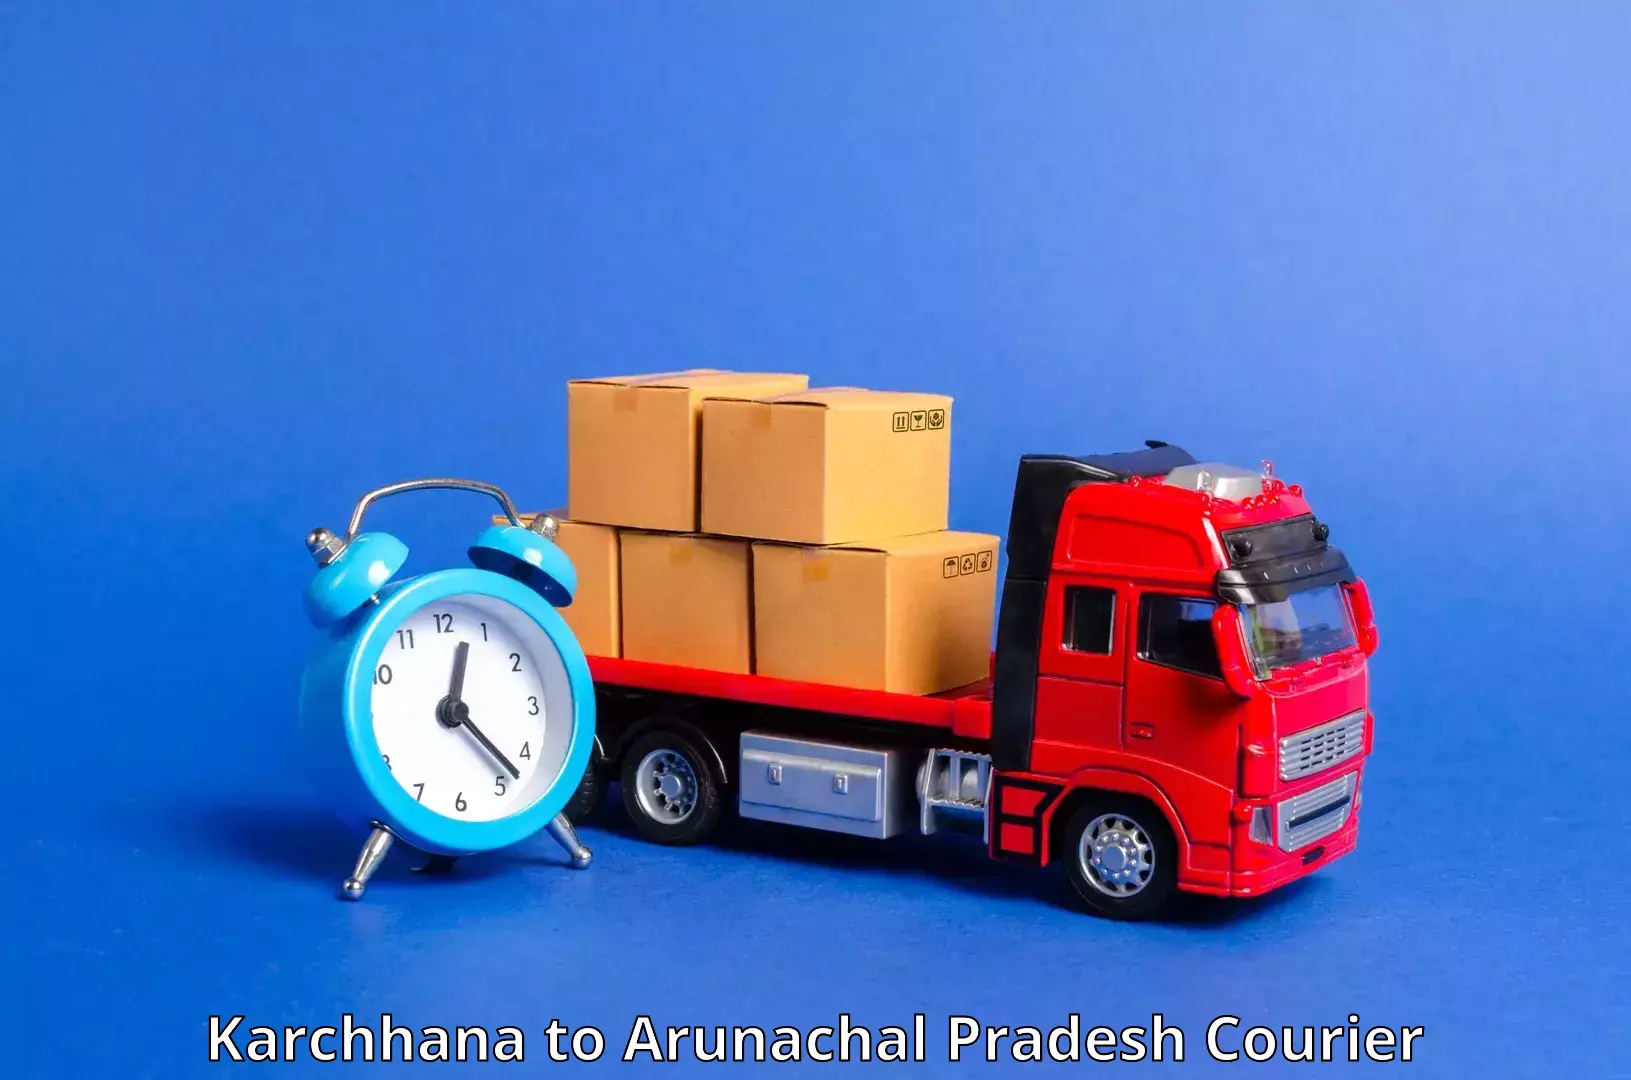 High-performance logistics Karchhana to Arunachal Pradesh